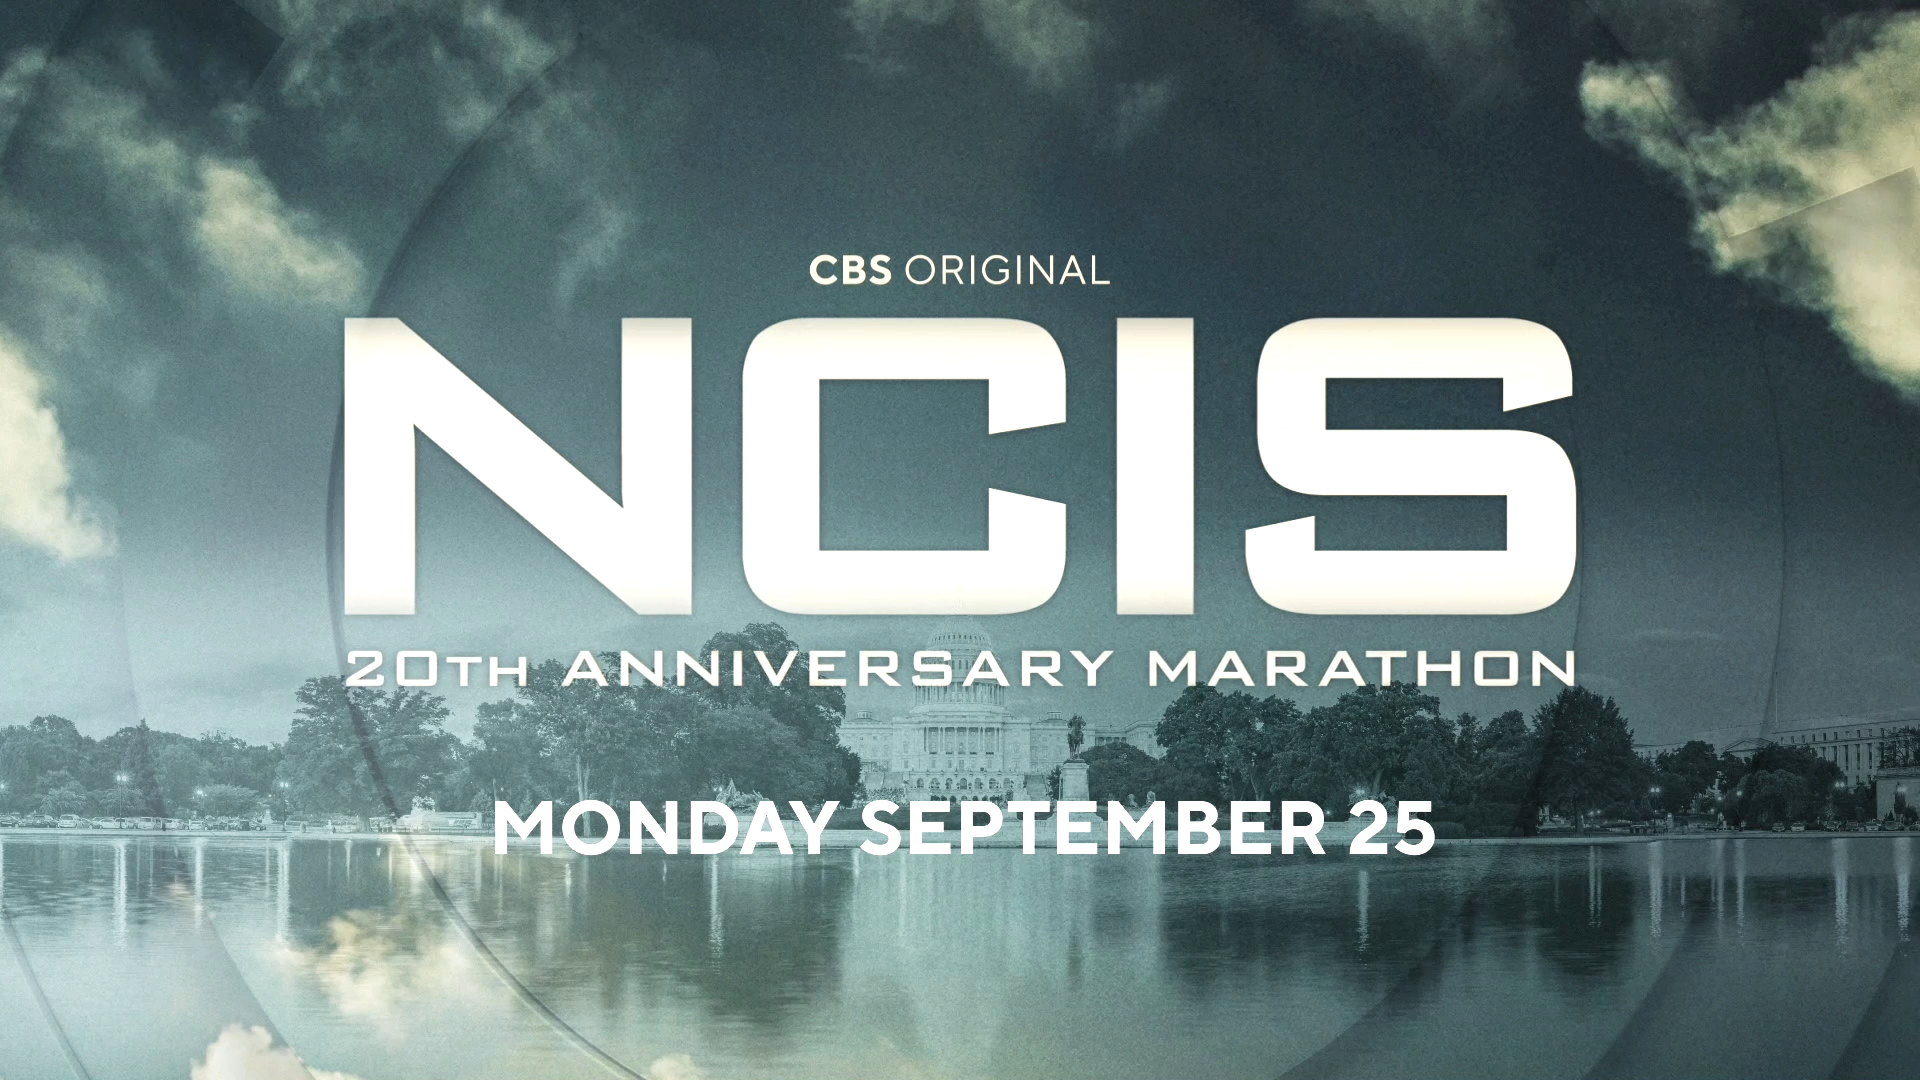 CBS Declares Monday, Sept. 25 "NCIS Day"